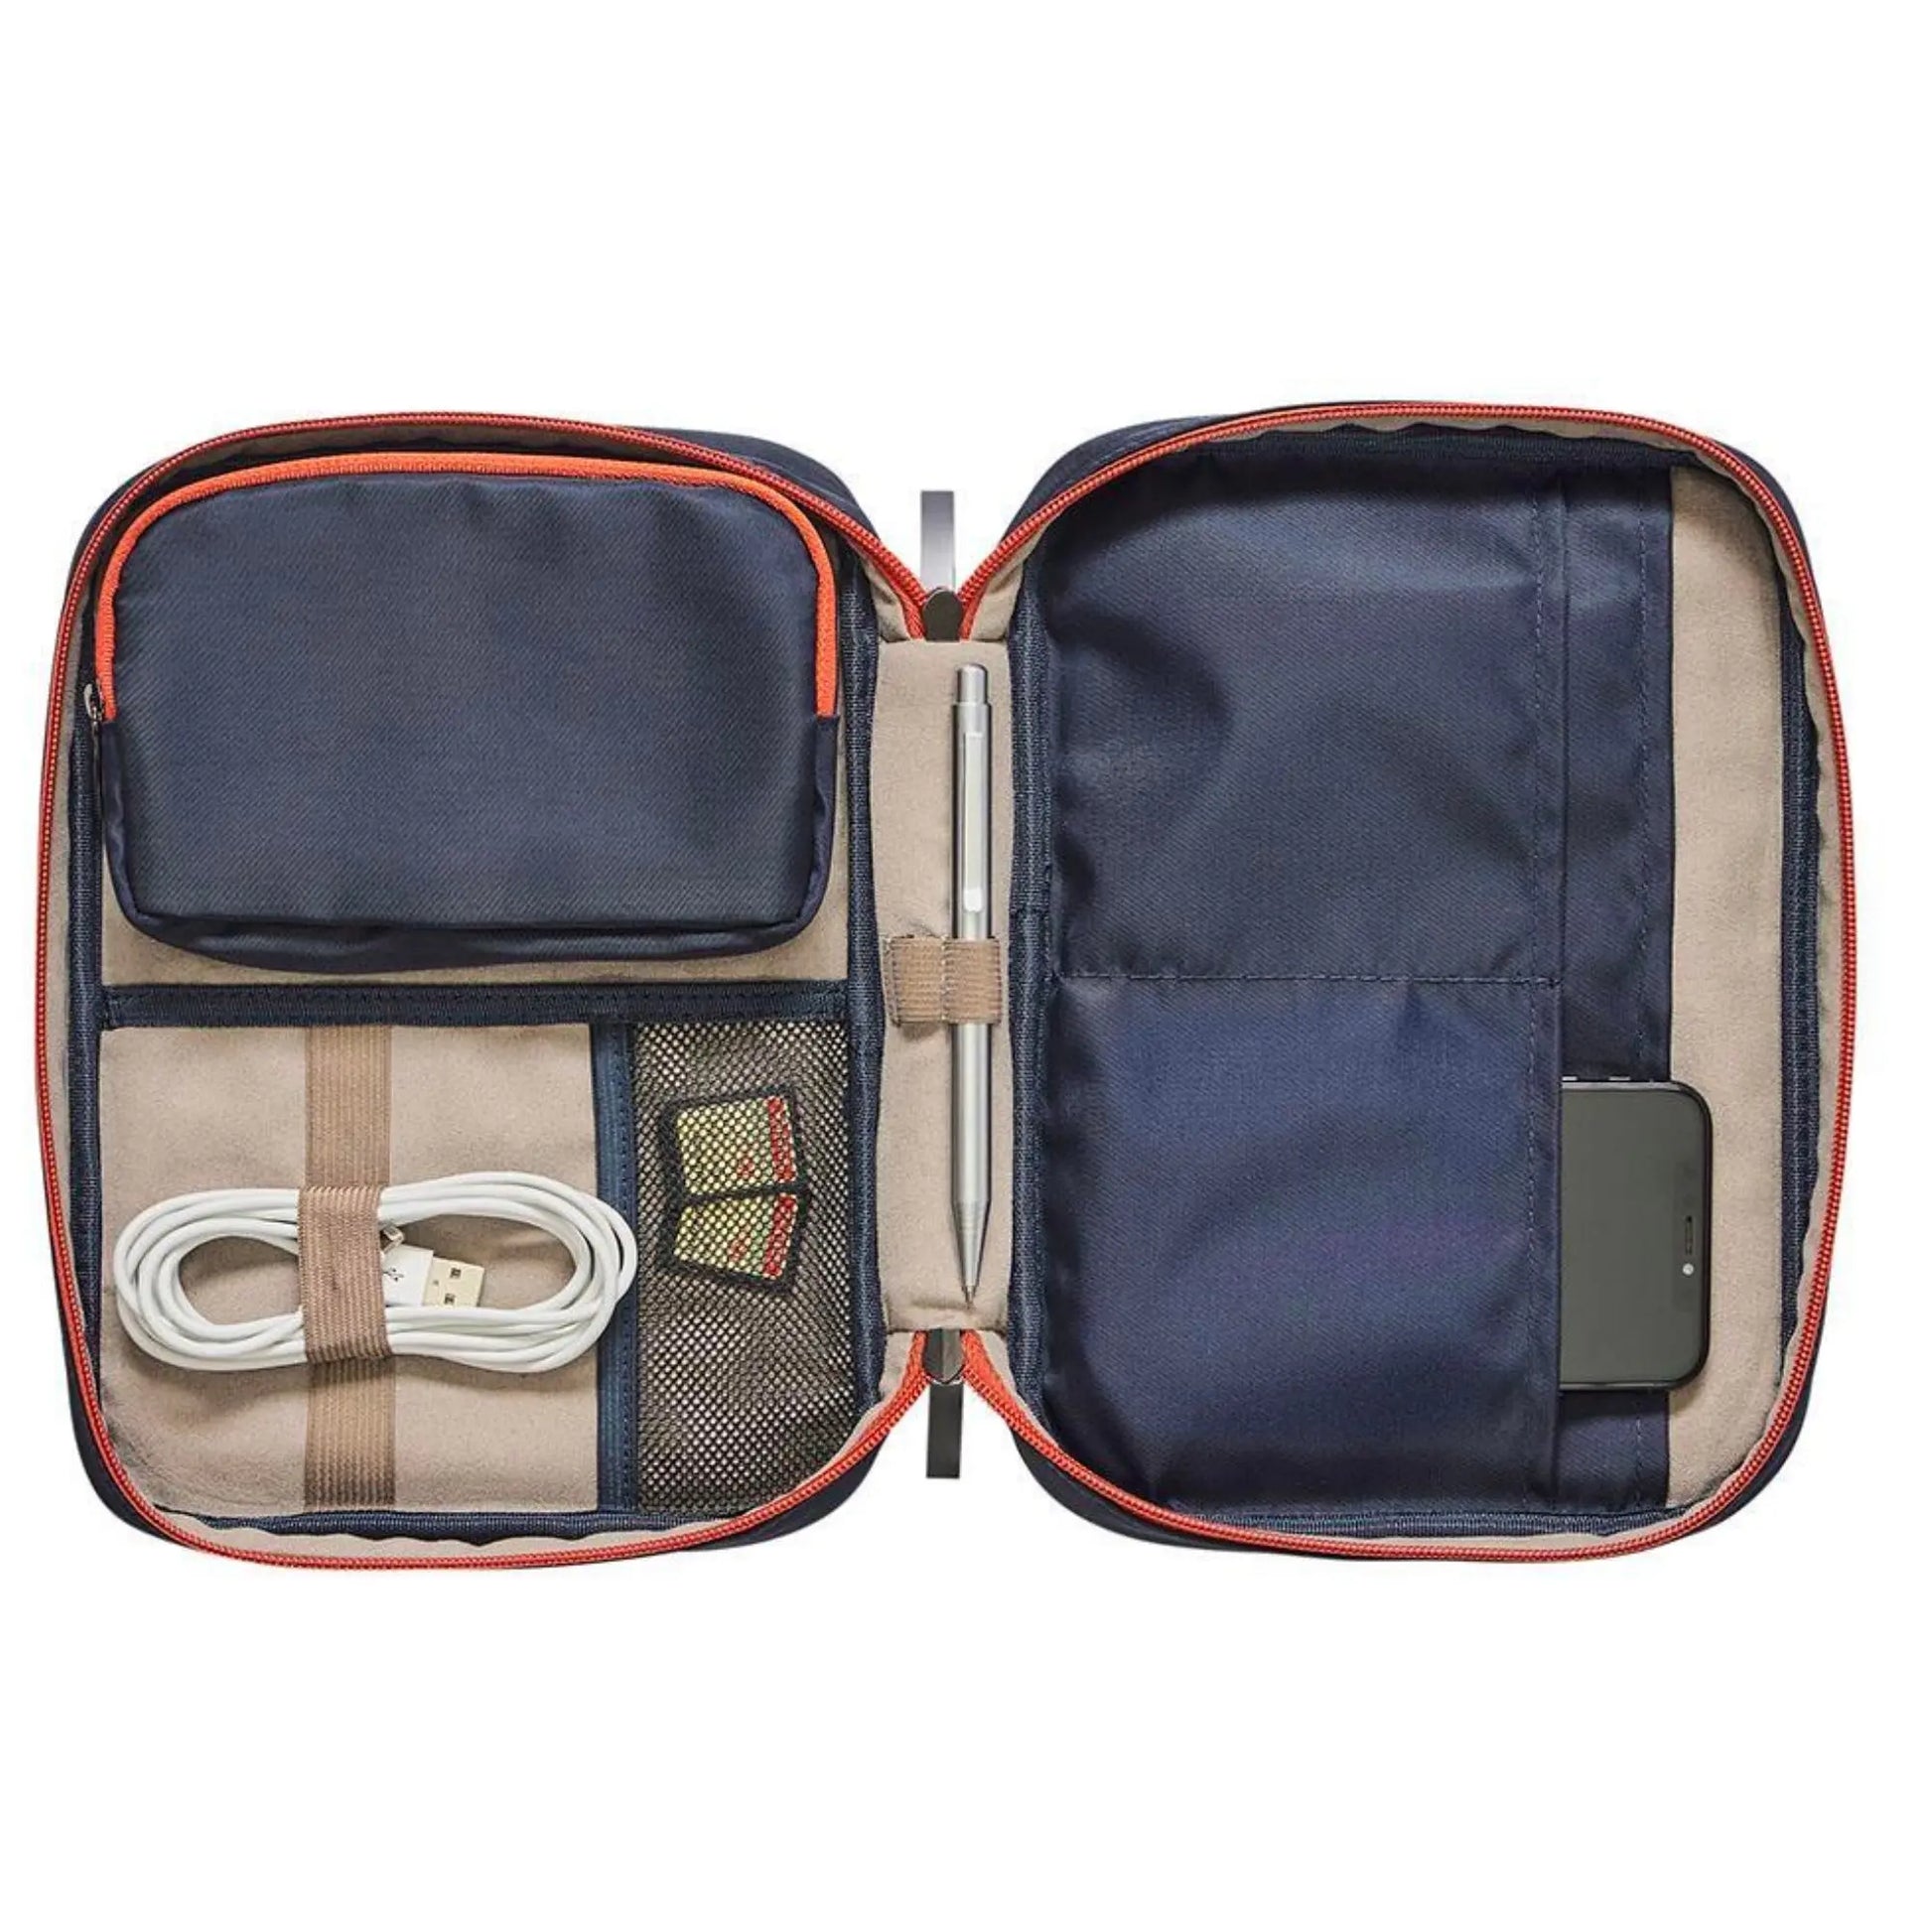 Buy Gentlemen's Hardware Travel Tech Case - Navy | Travel Bags at Woven Durham